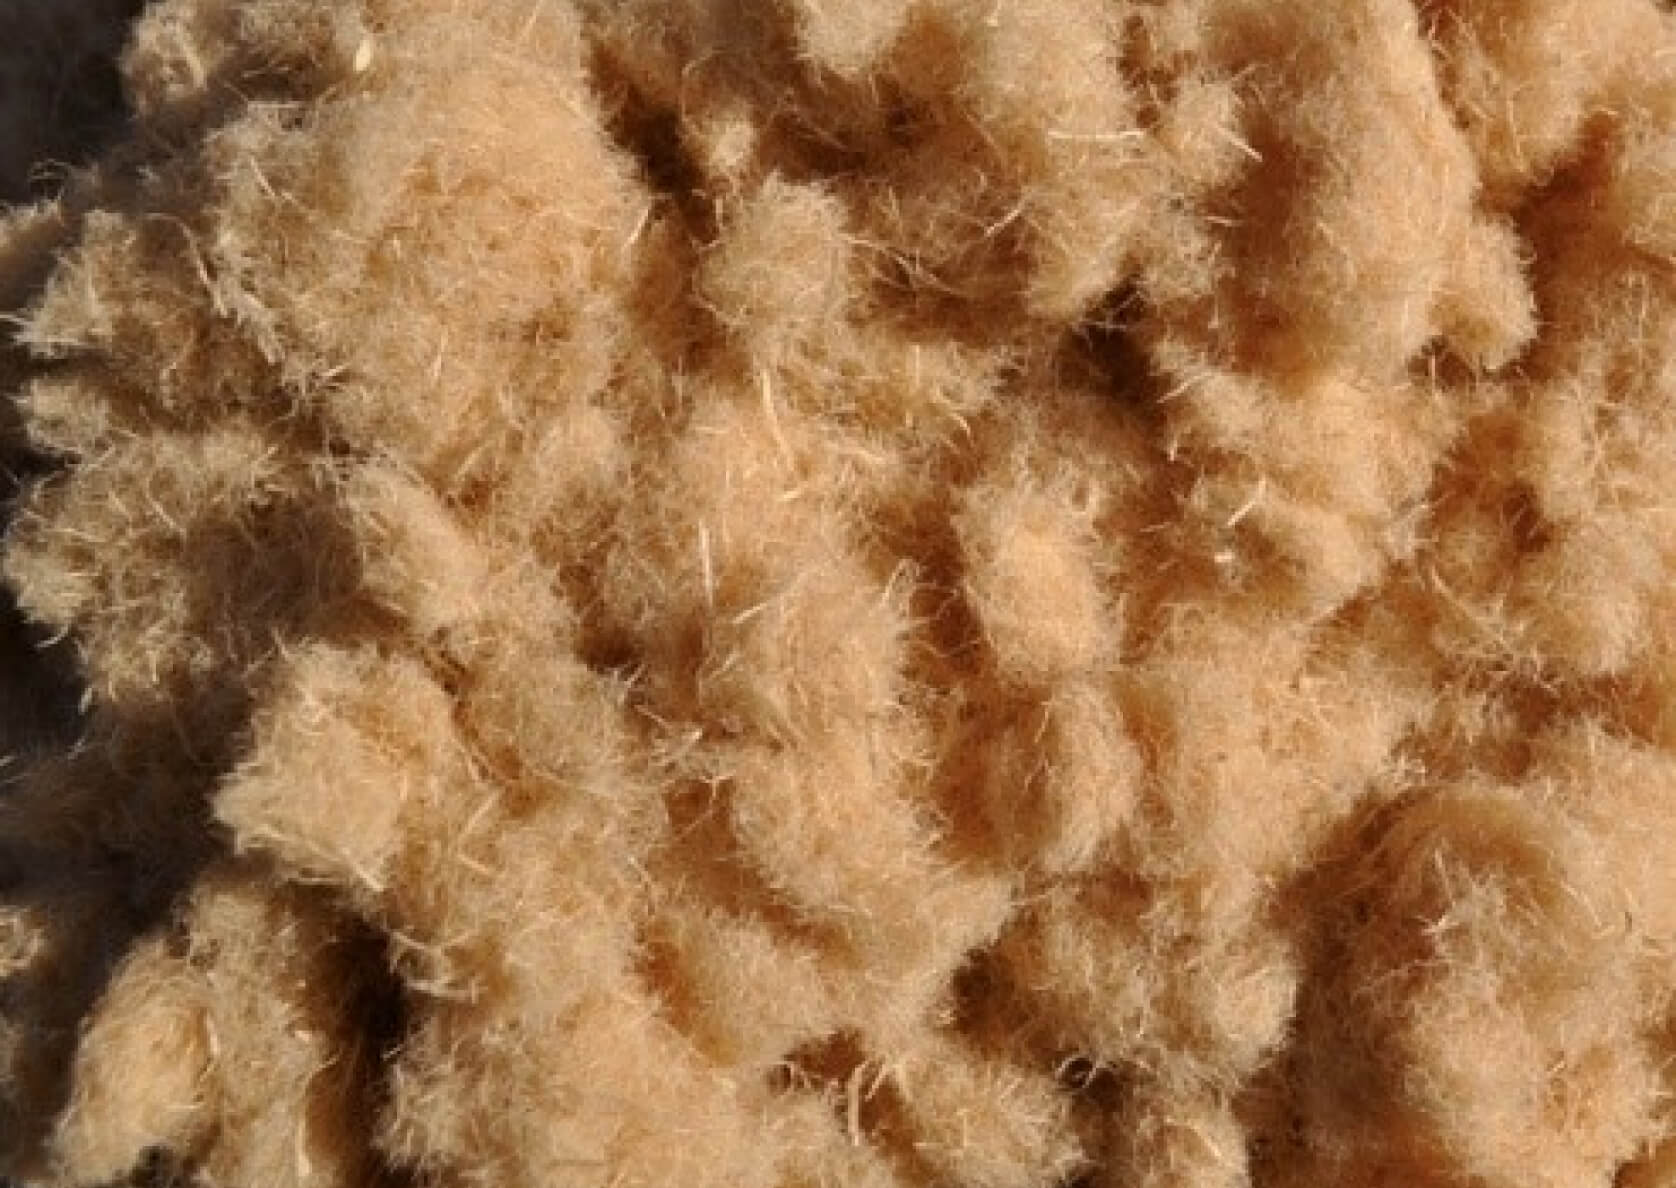 Holzwolle als Dämmstoff. Nachhaltiger Baustoff aus unbehandeltem Holz